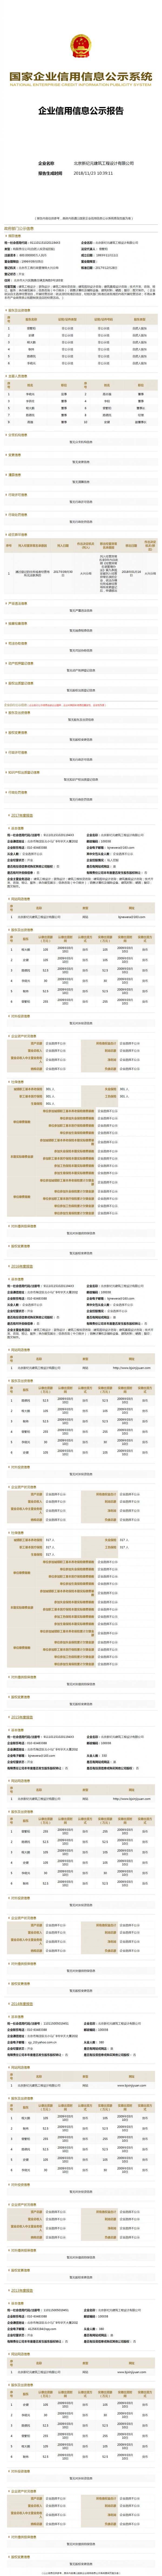 conew_北京新纪元建筑工程设计有限公司 (1)